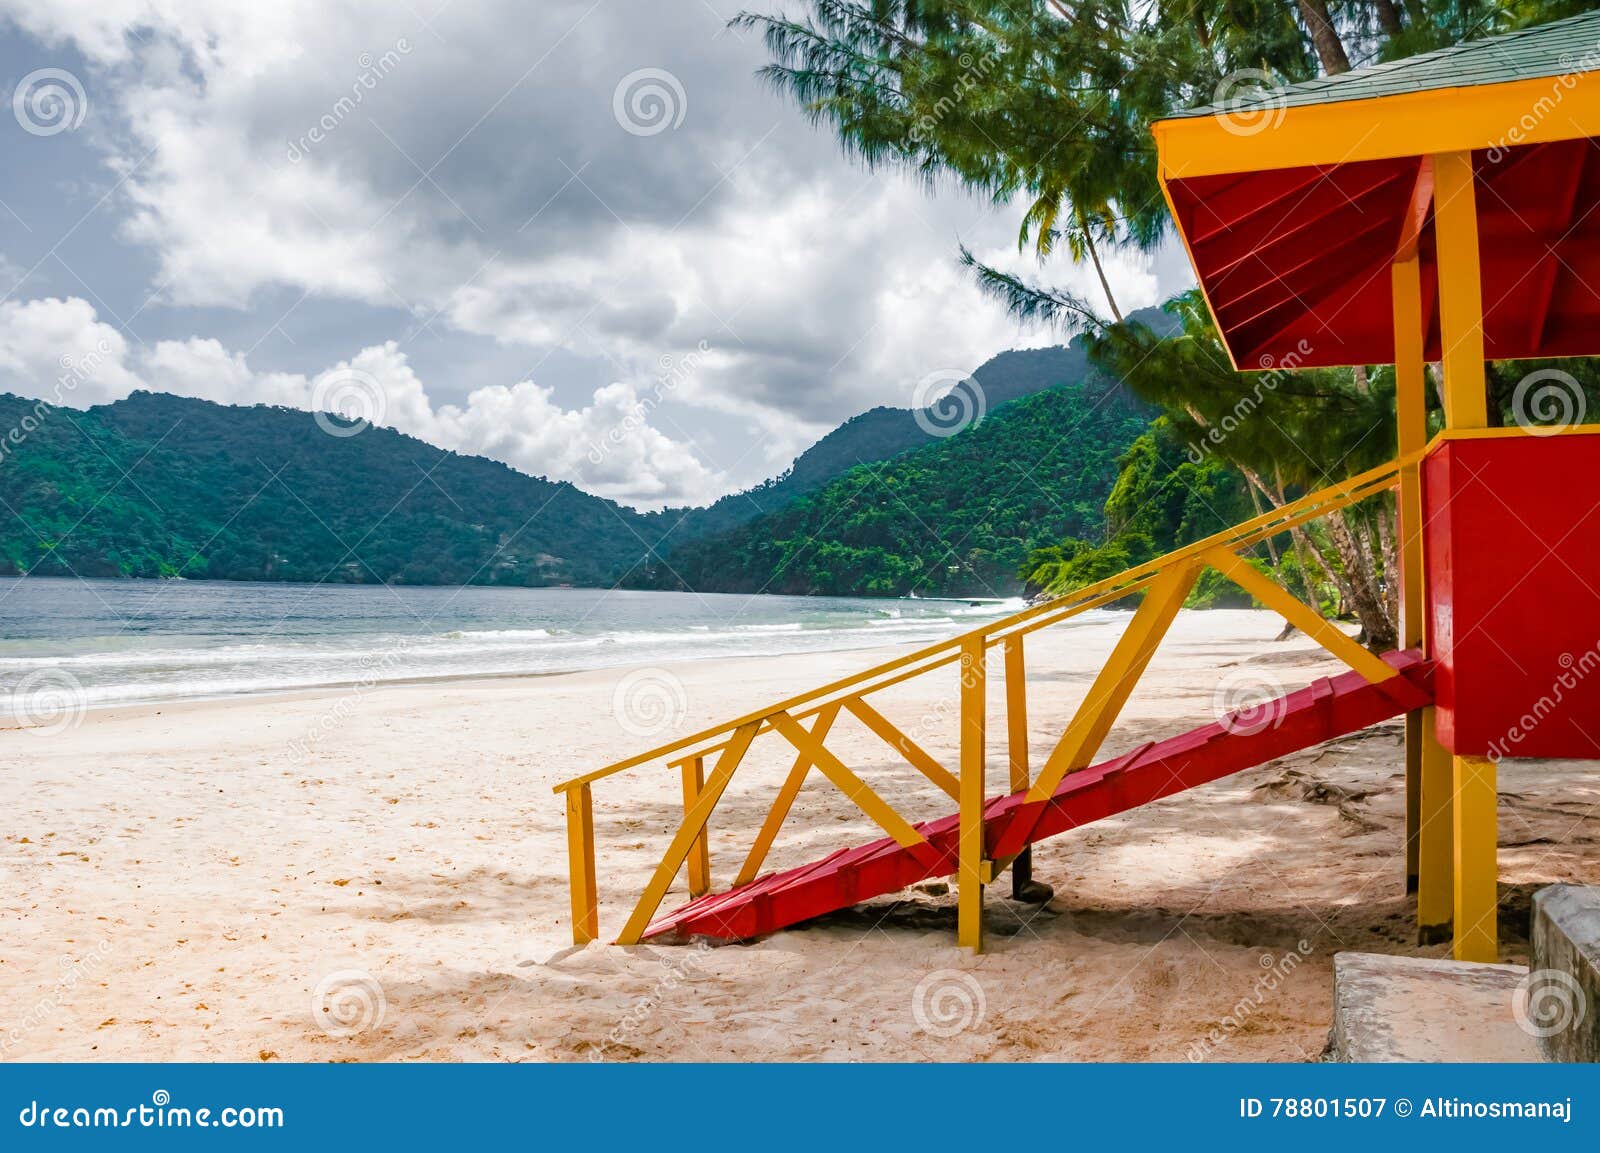 maracas beach trinidad and tobago lifeguard cabin side view empty beach